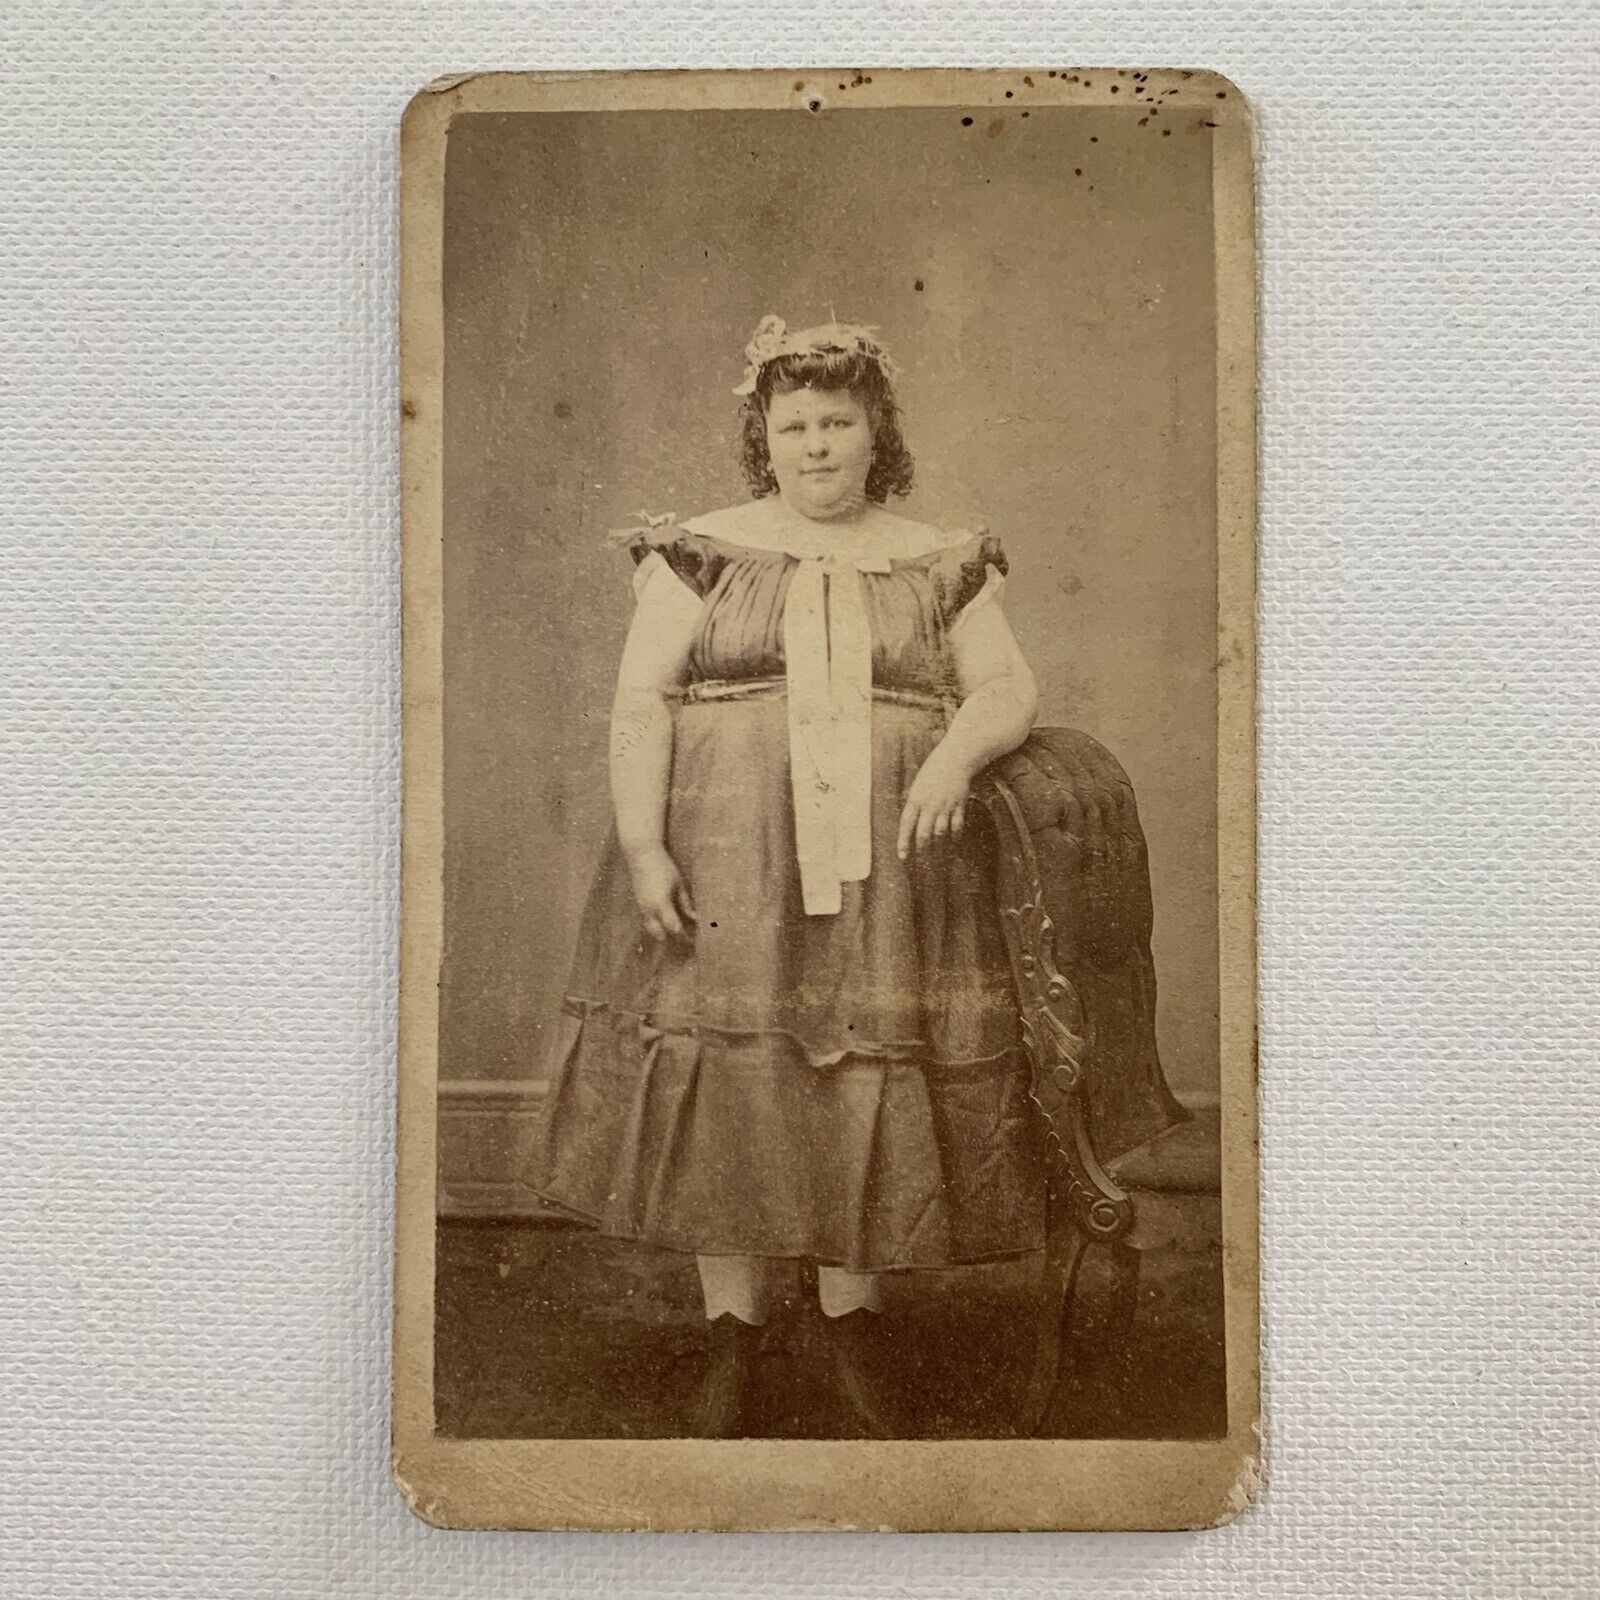 Antique CDV Photograph Plus Size Woman Fat Lady Circus Sideshow Columbus OH